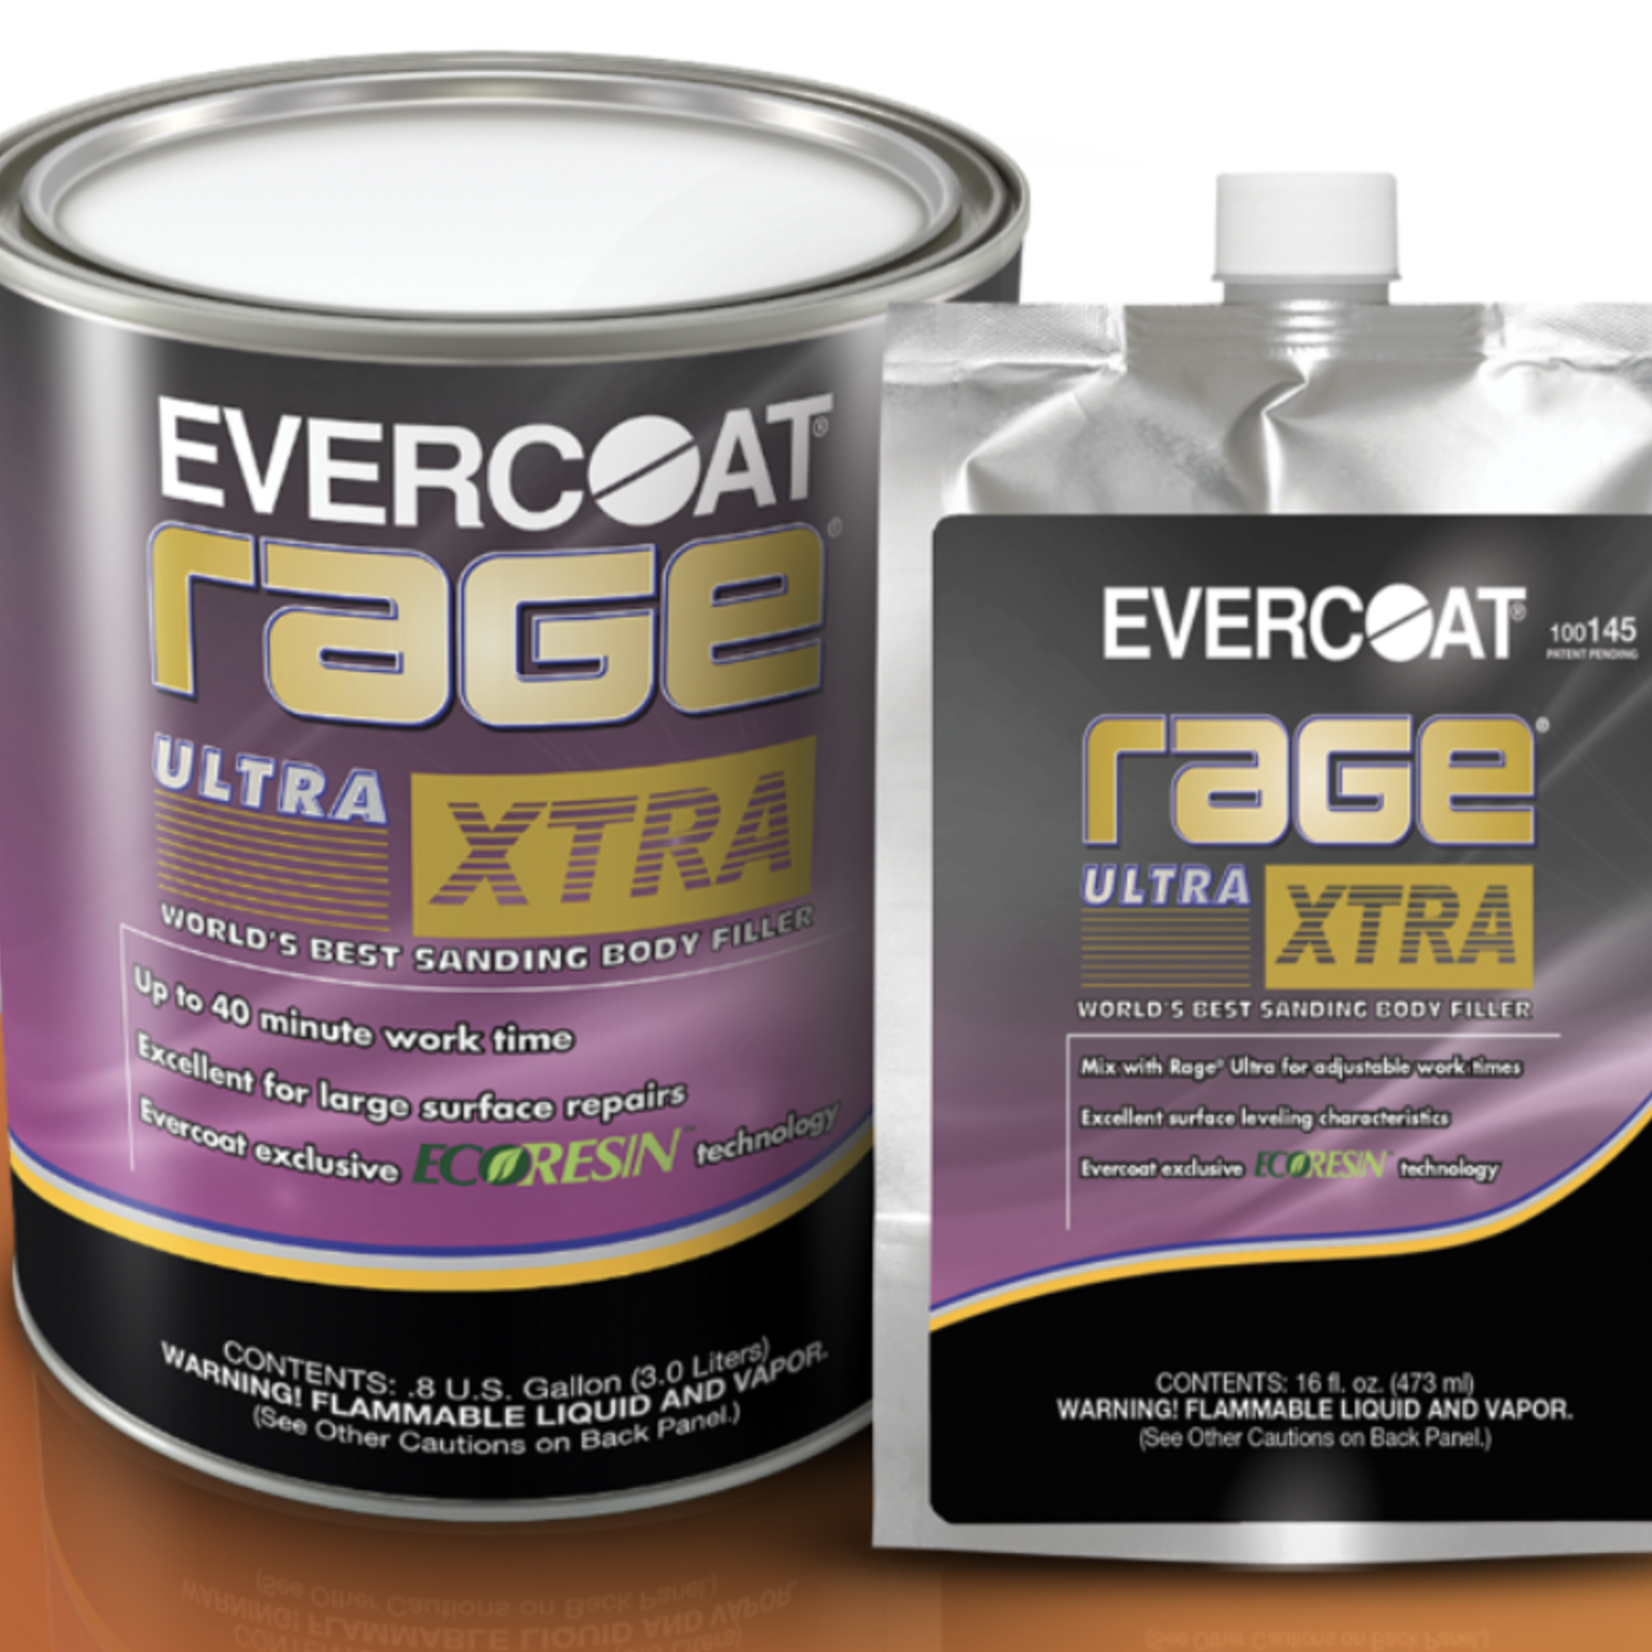 Evercoat Rage Ultra Xtra - Collision 360 Inc.